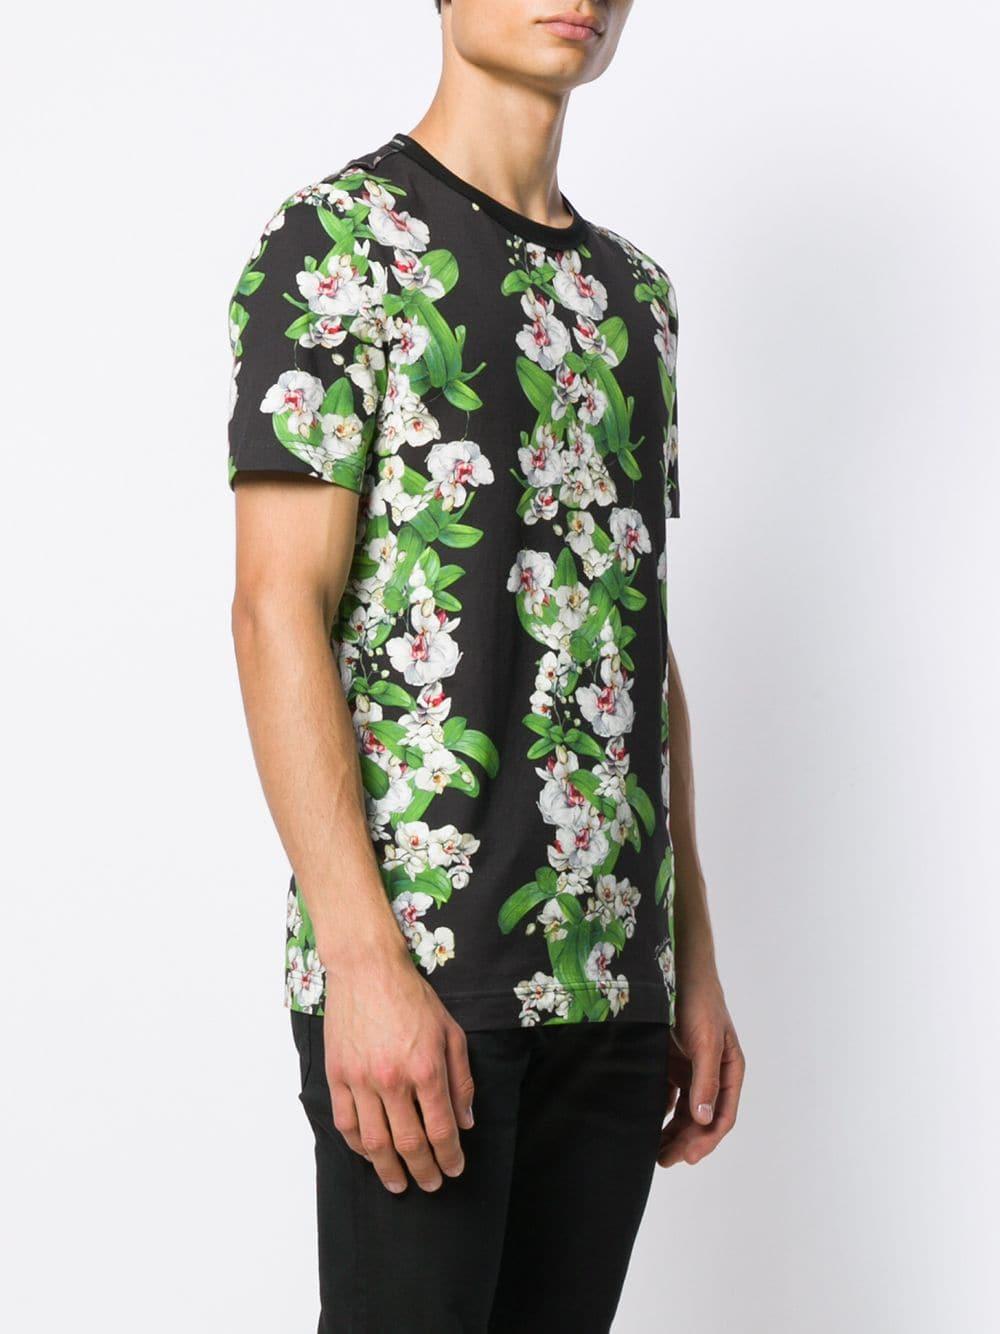 Dolce & Gabbana Cotton Floral Print T-shirt in Black for Men - Lyst